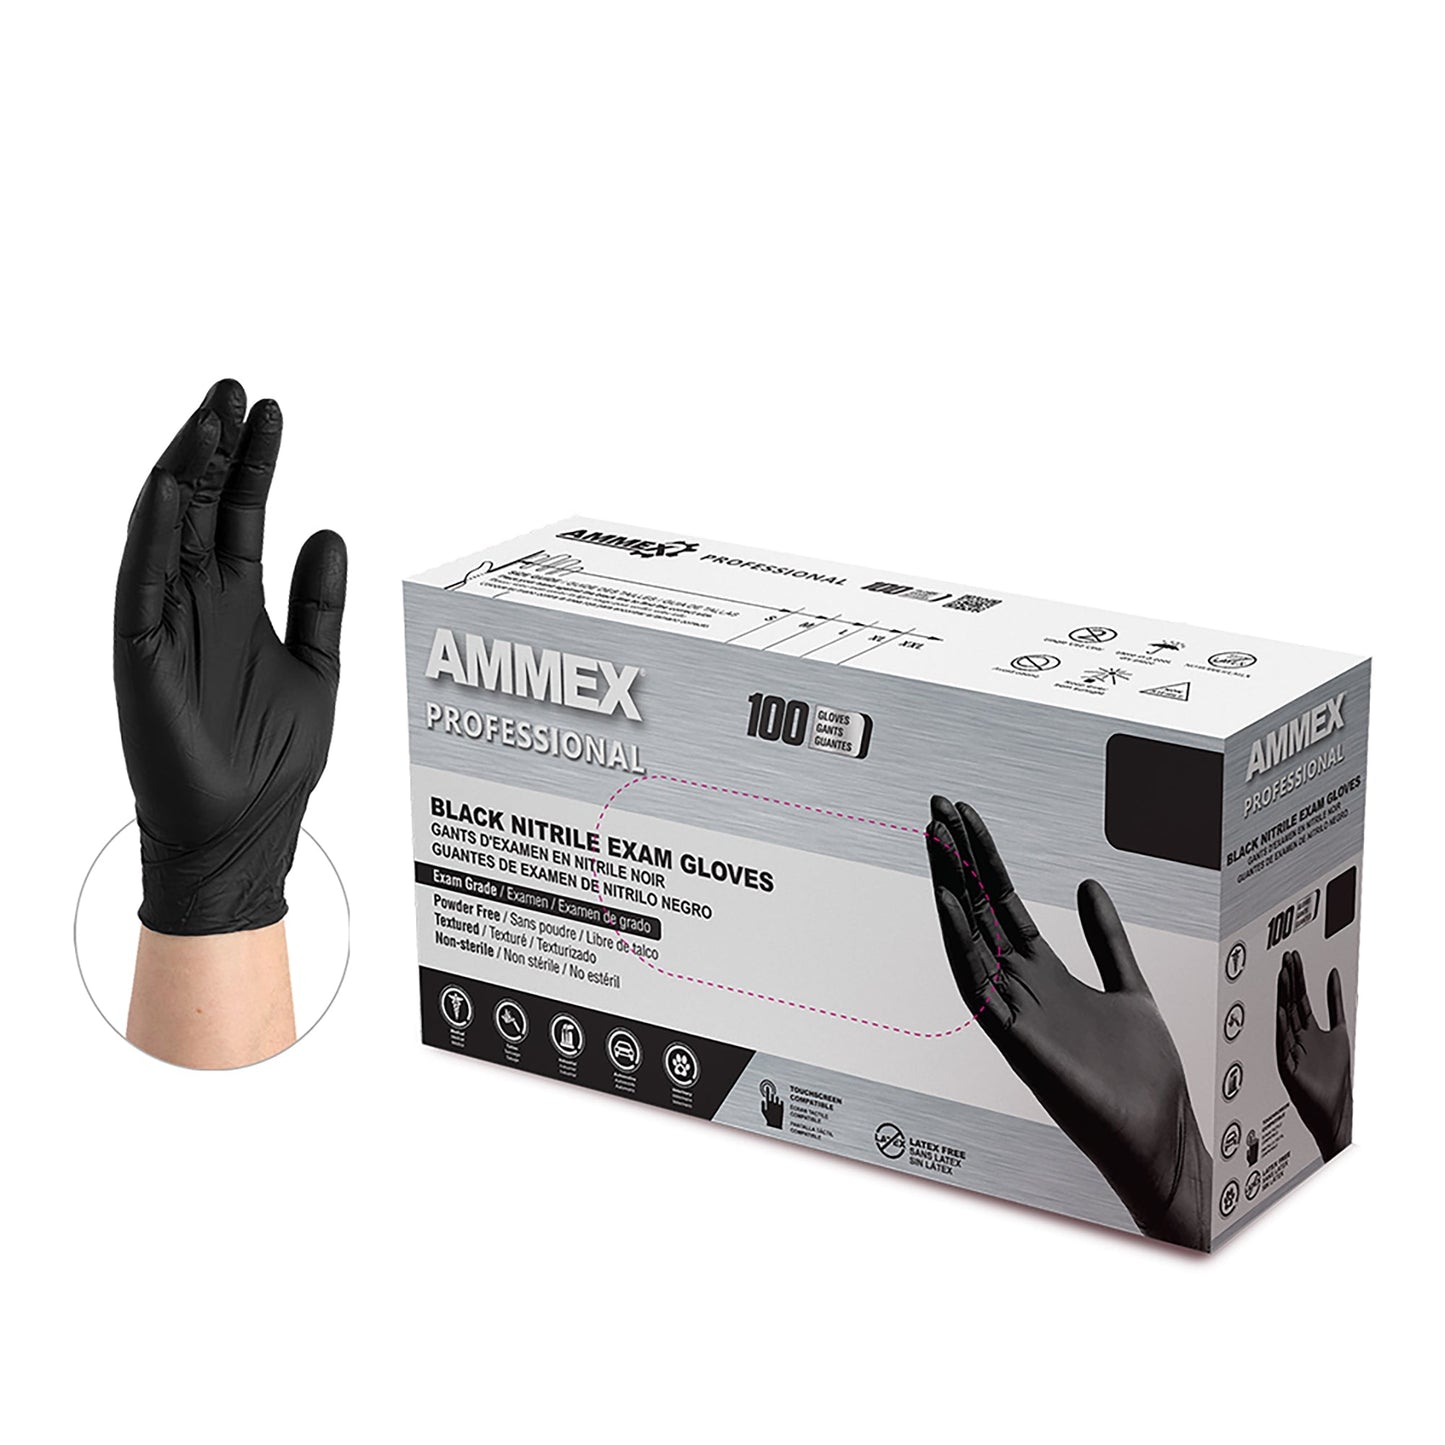 AMMEX Professional Black Nitrile, Small, Box of 100